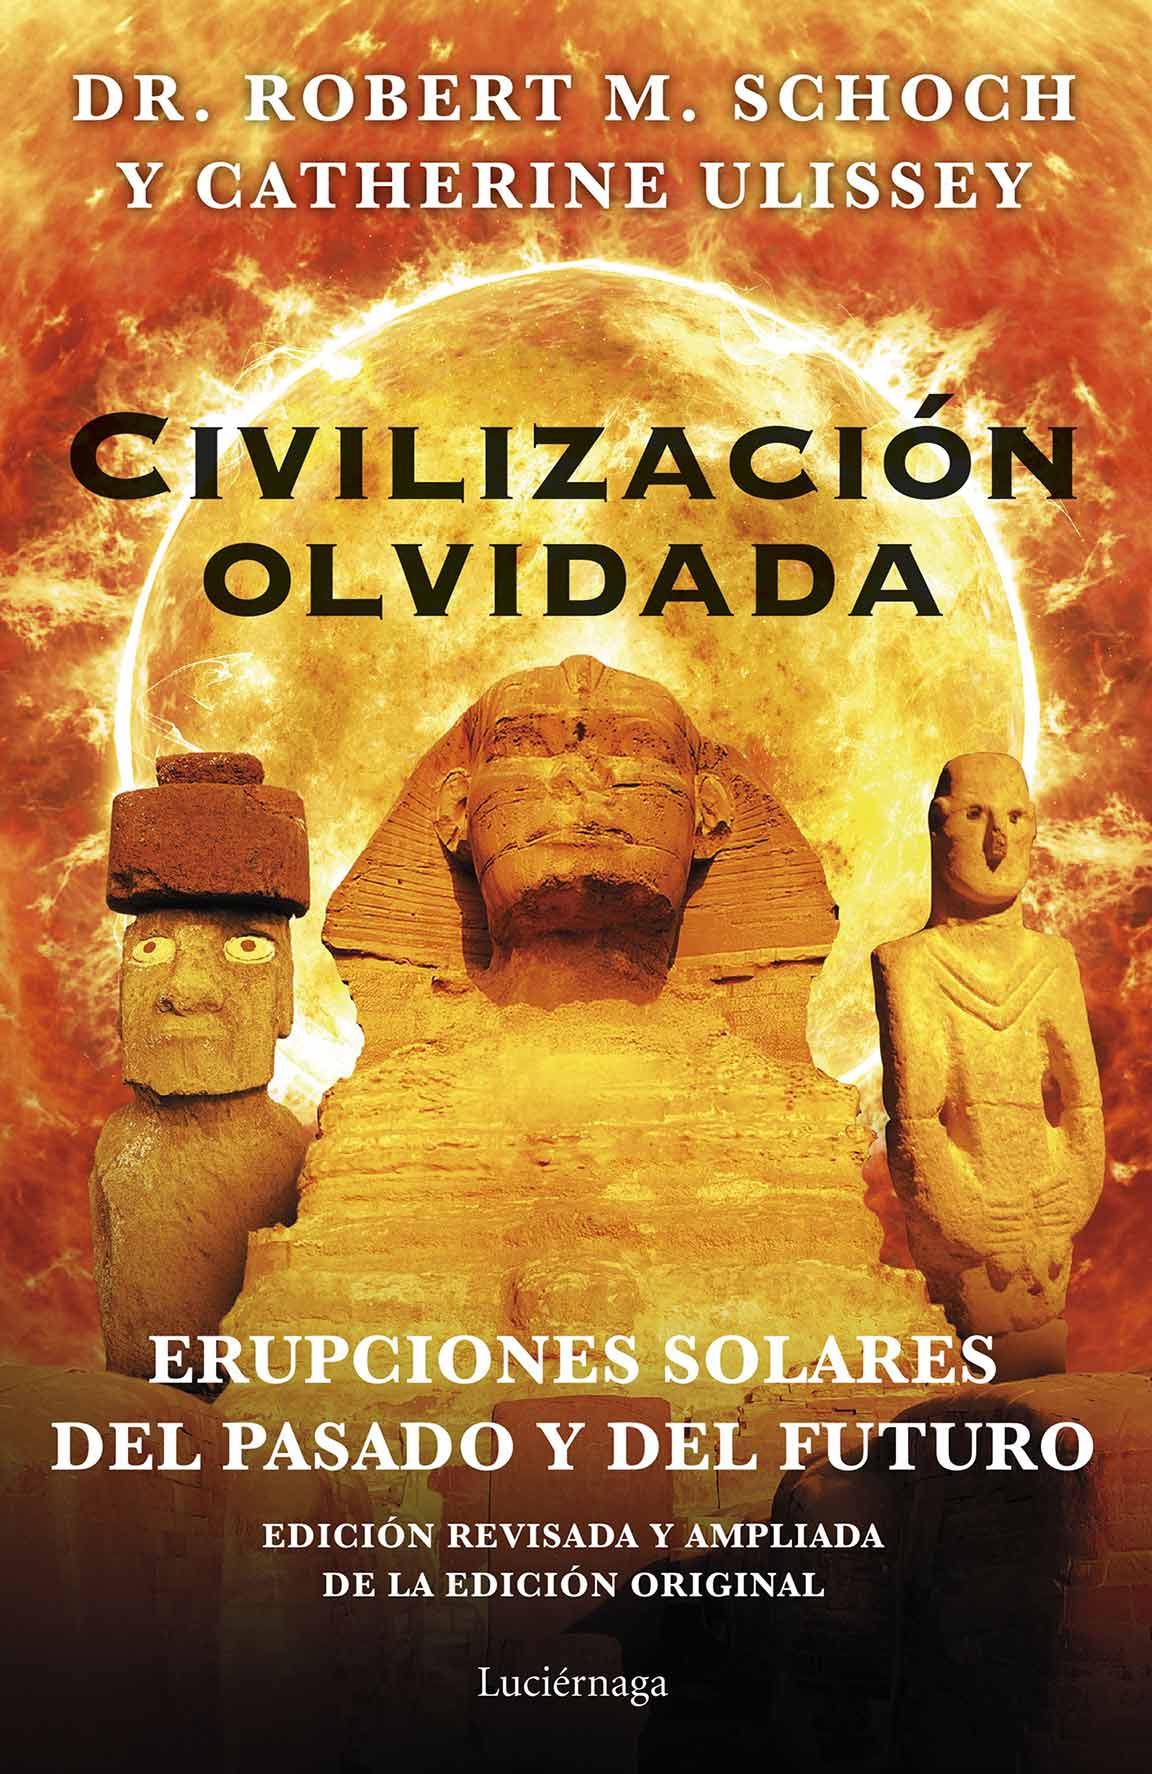 Front cover of Civilización olvidada, the Spanish edition of Forgotten Civilization